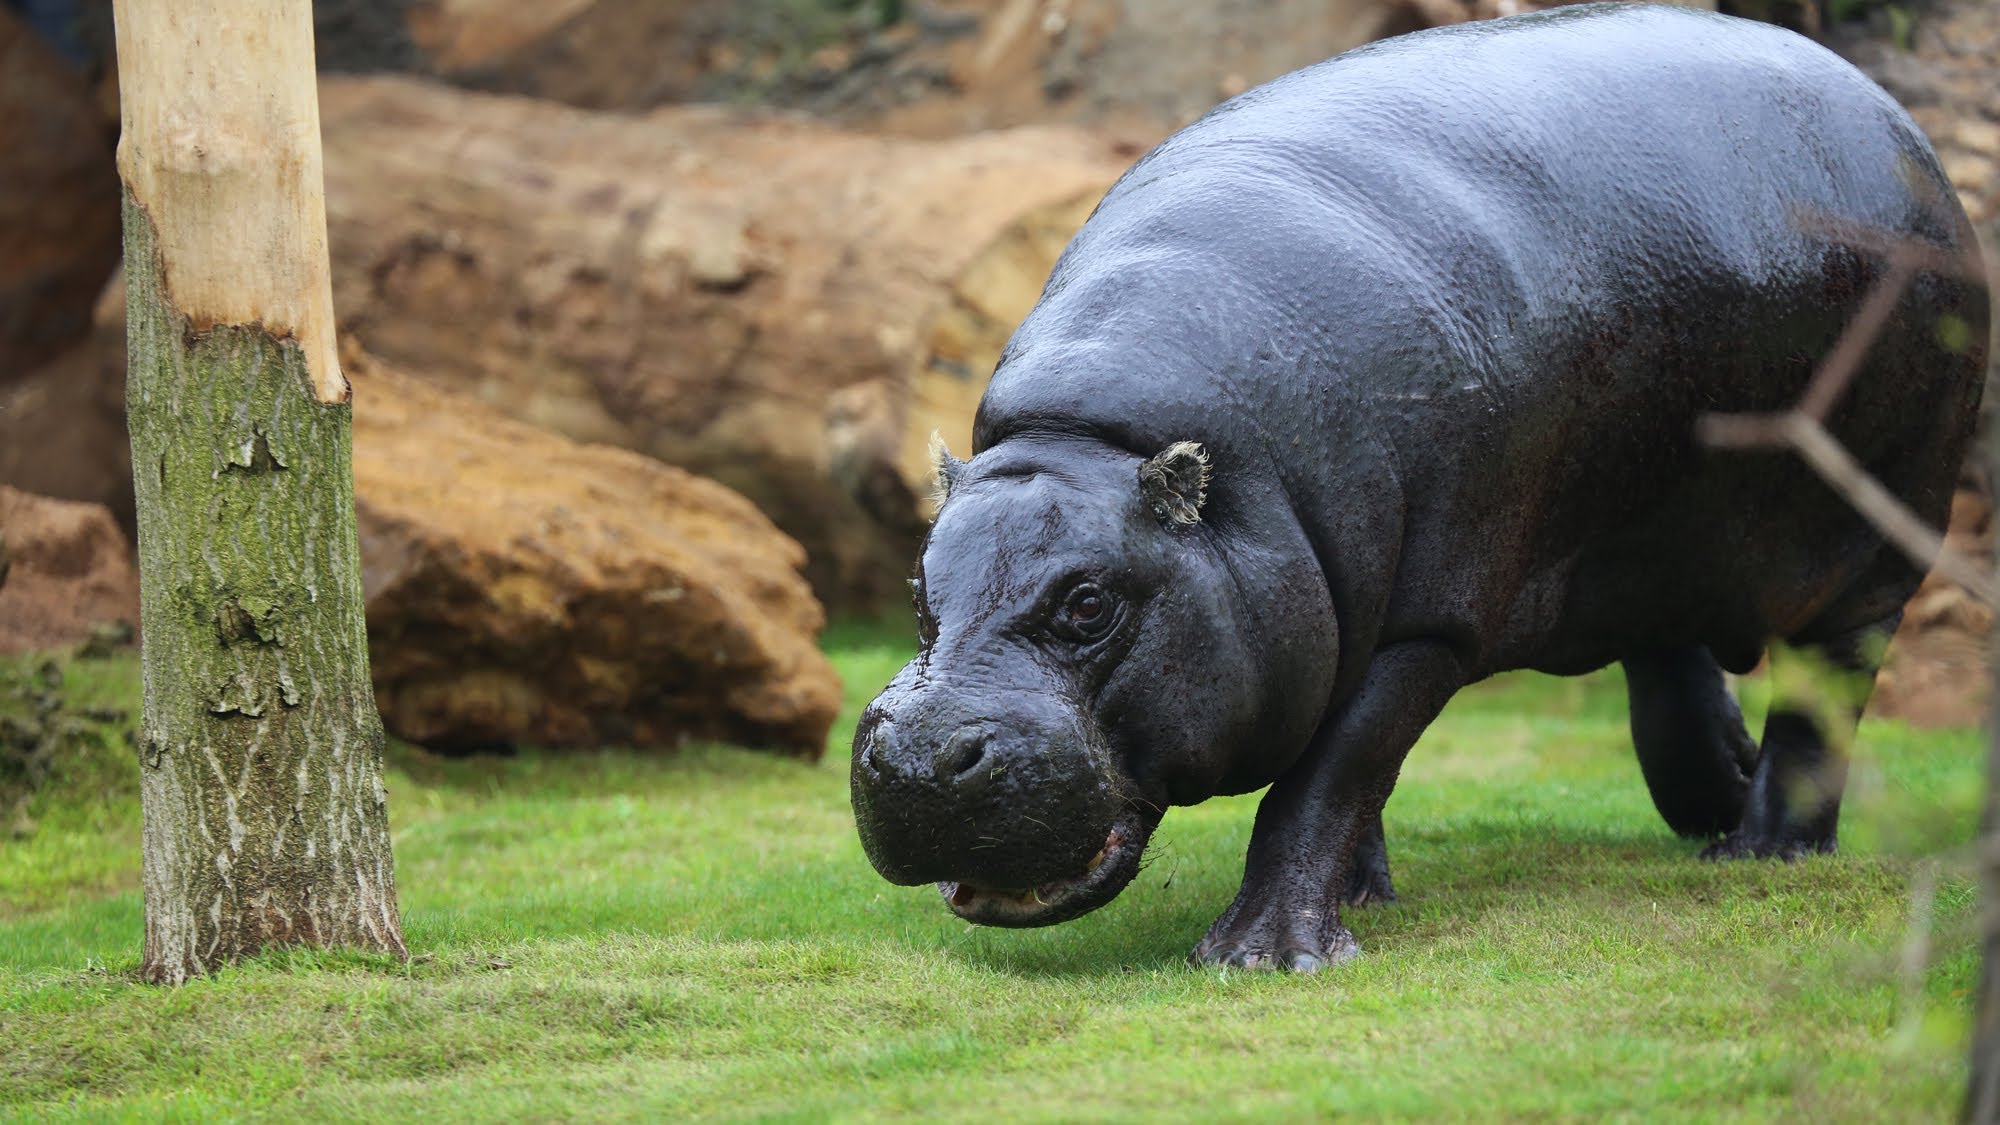 Pygmy hippos explore their new home - YouTube